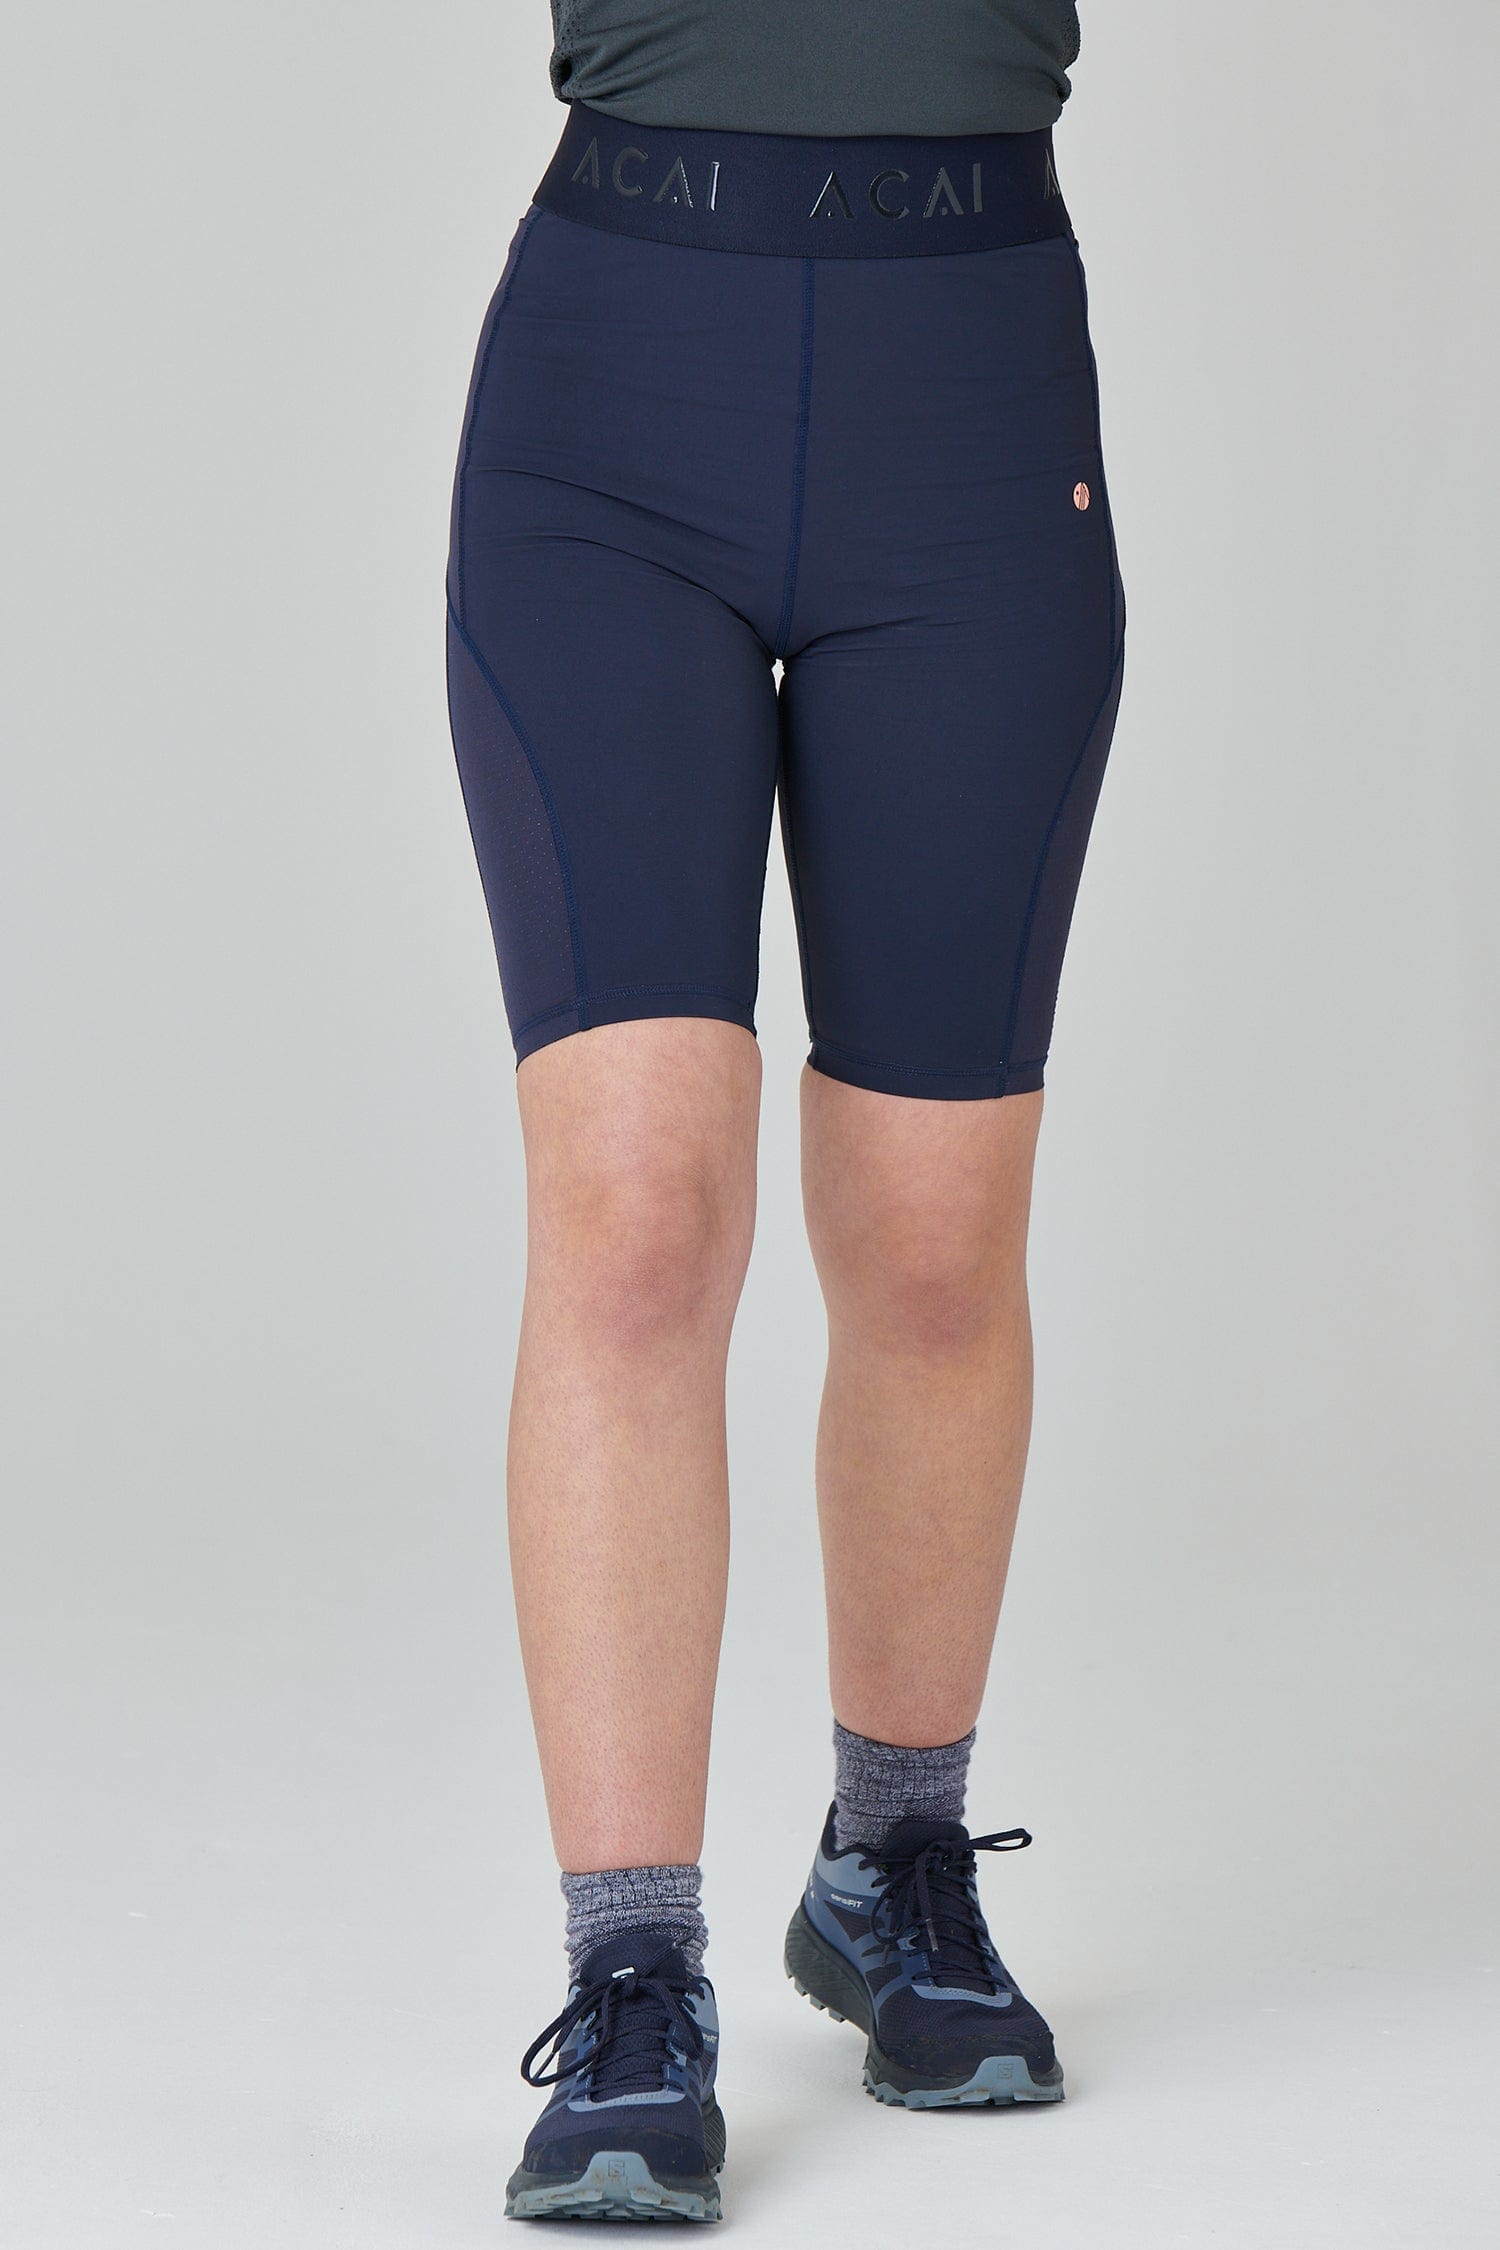 The Panelled Shorts- Midnight Blue - Medium / Uk12 - Womens - Acai Outdoorwear